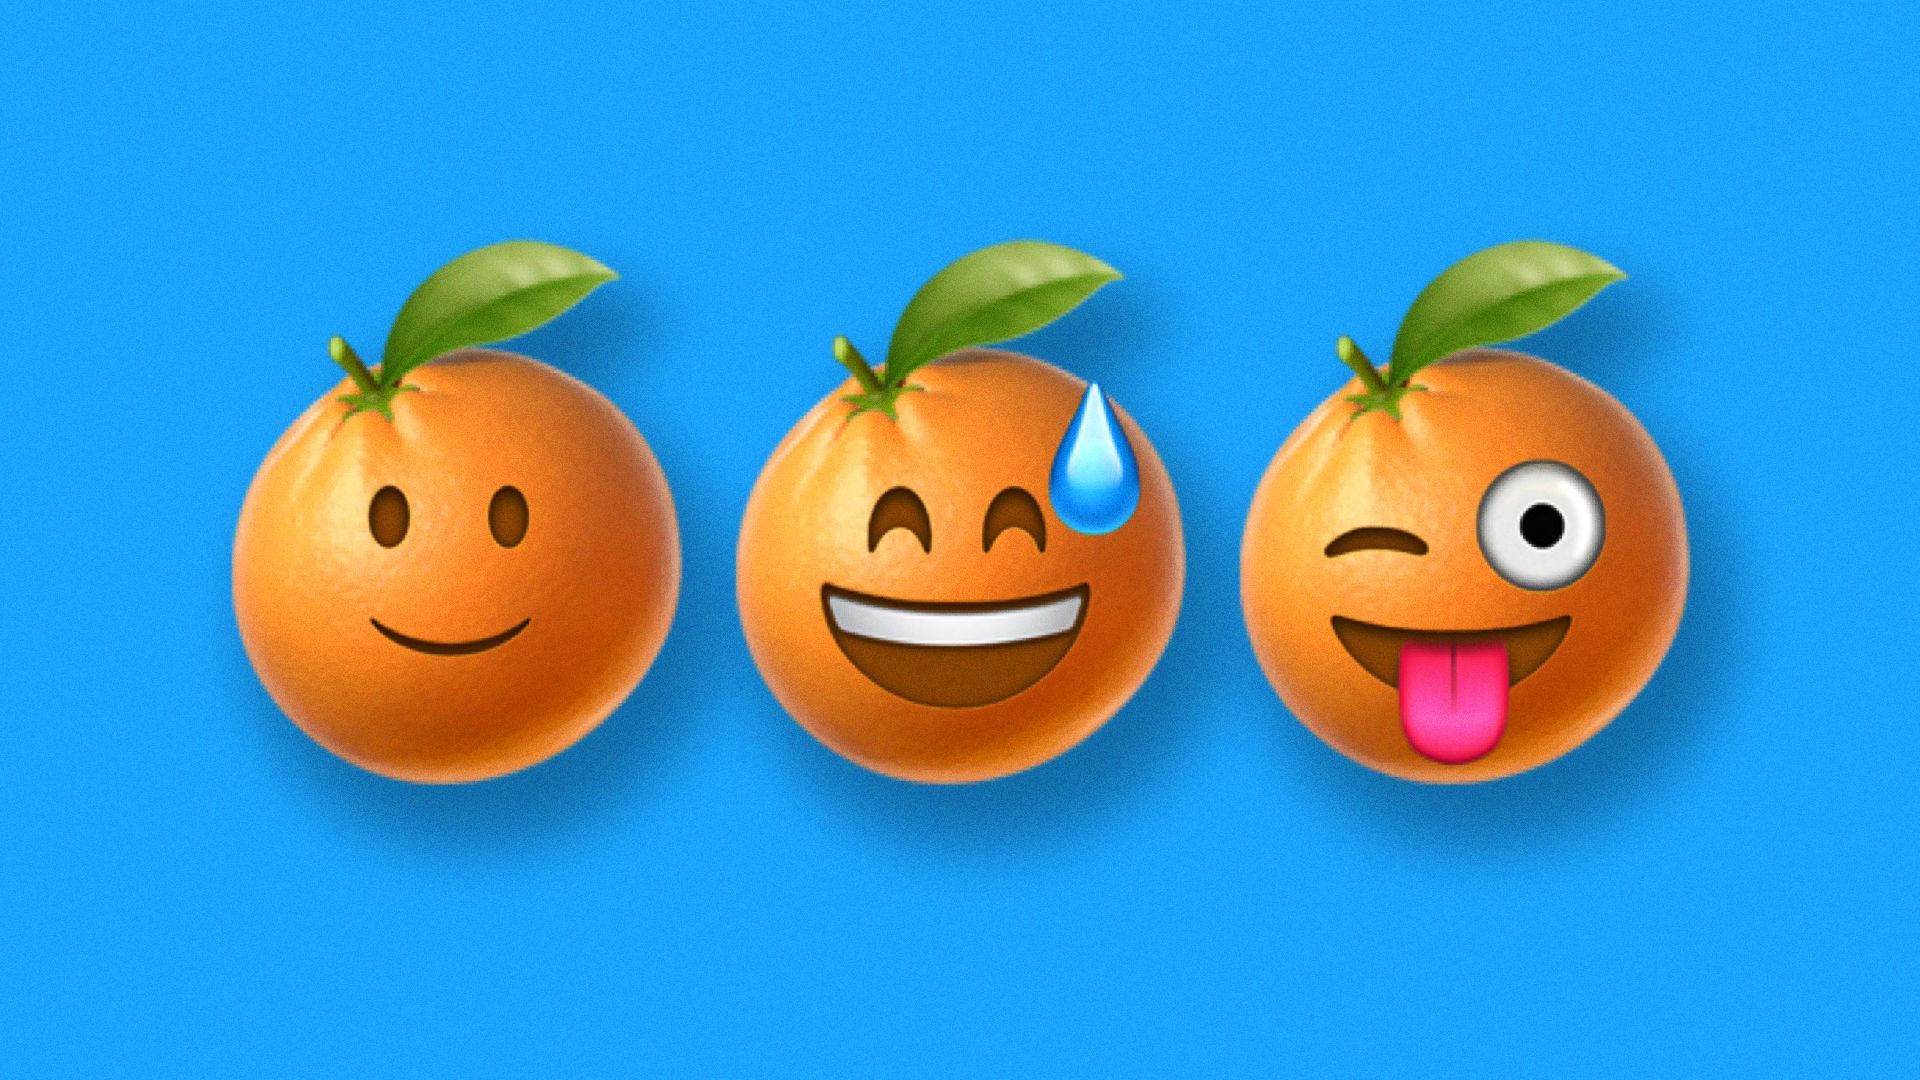 Three different smiling emojis imposed on the orange emoji.